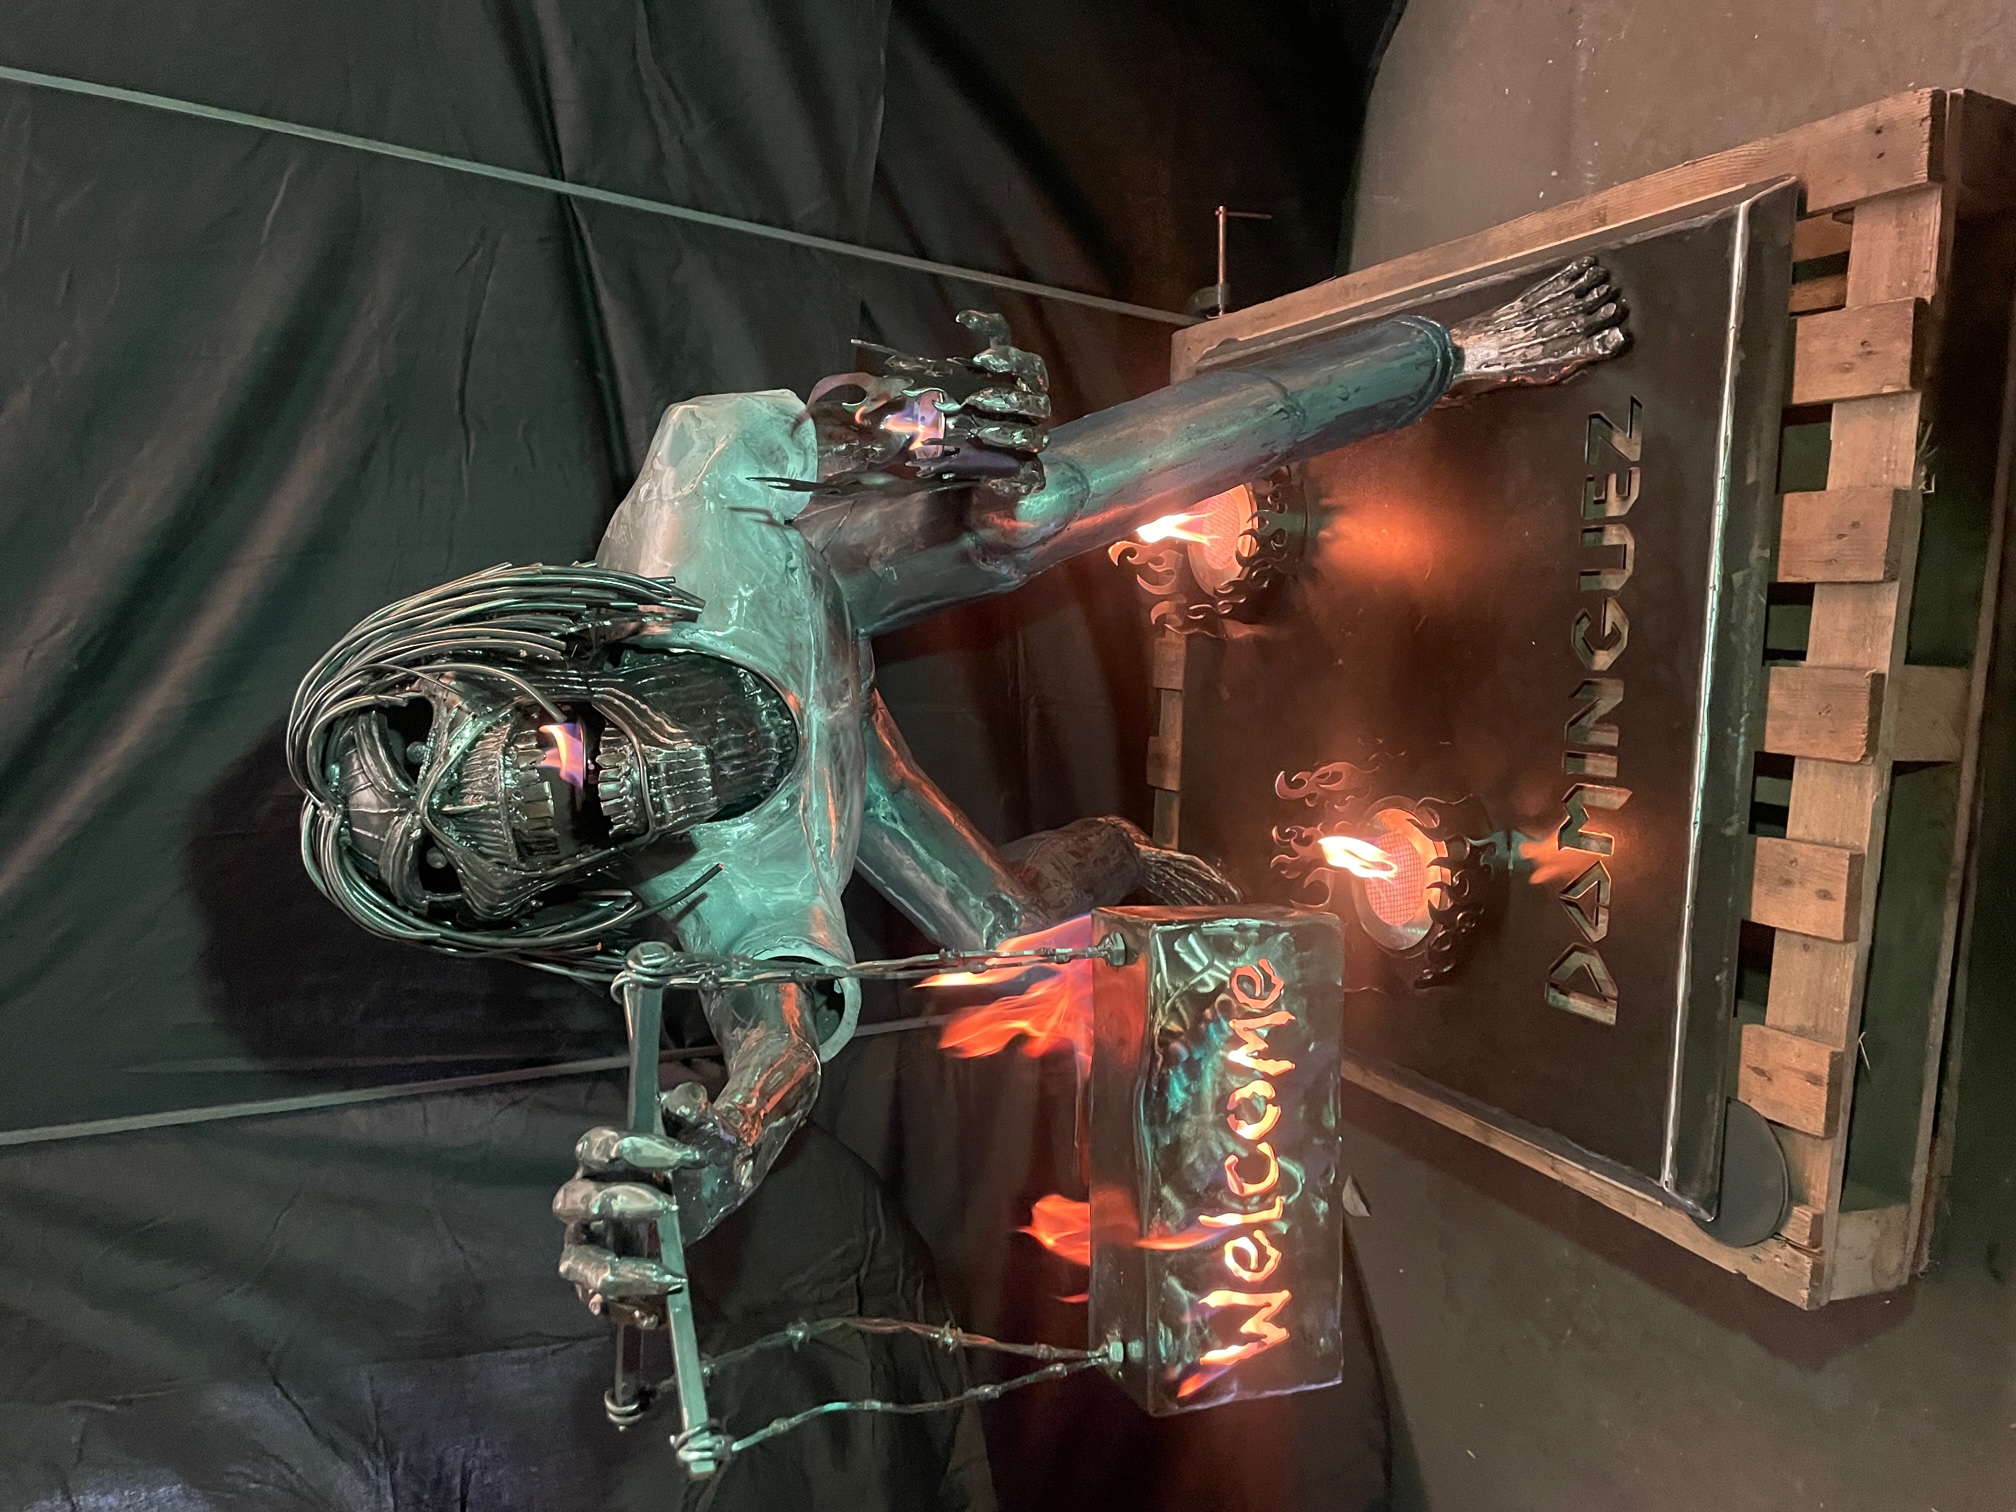 "Eddie the Head" Iron Maiden Steel Welcome Sculpture with Bioethanol Burners